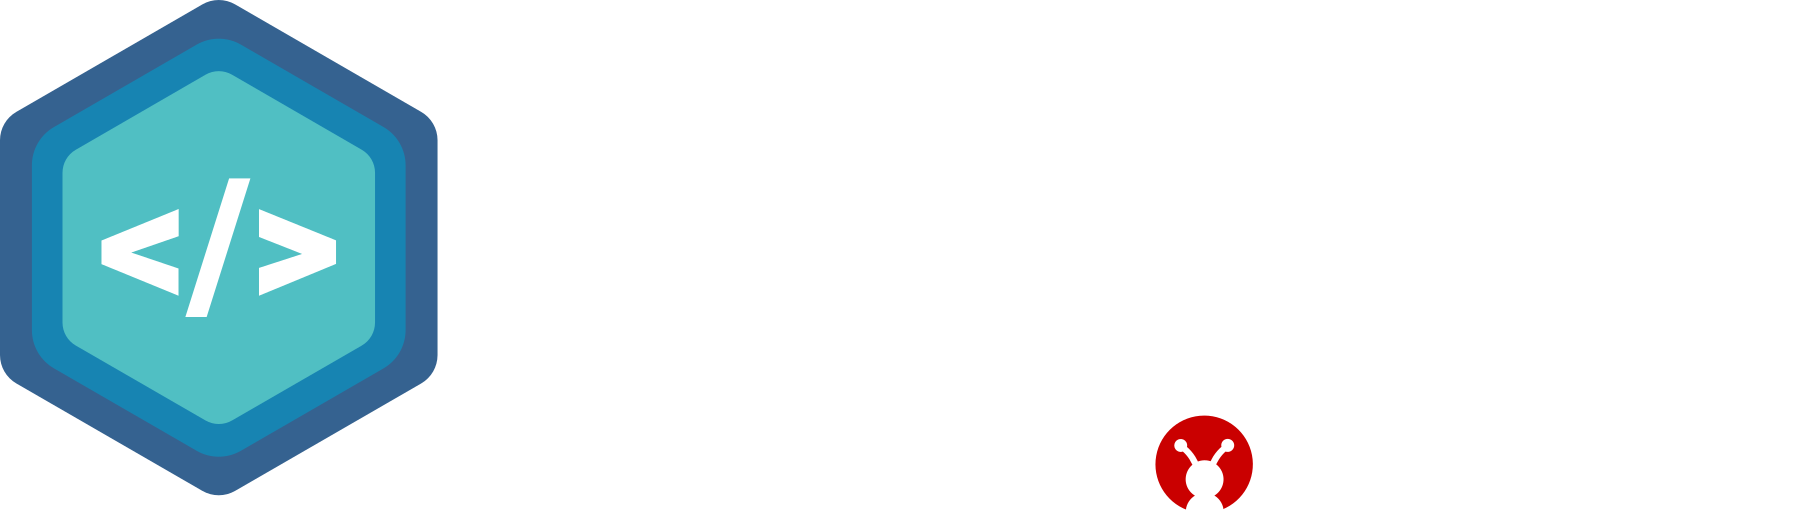 <p>Join the NativeBase raffle!</p>
